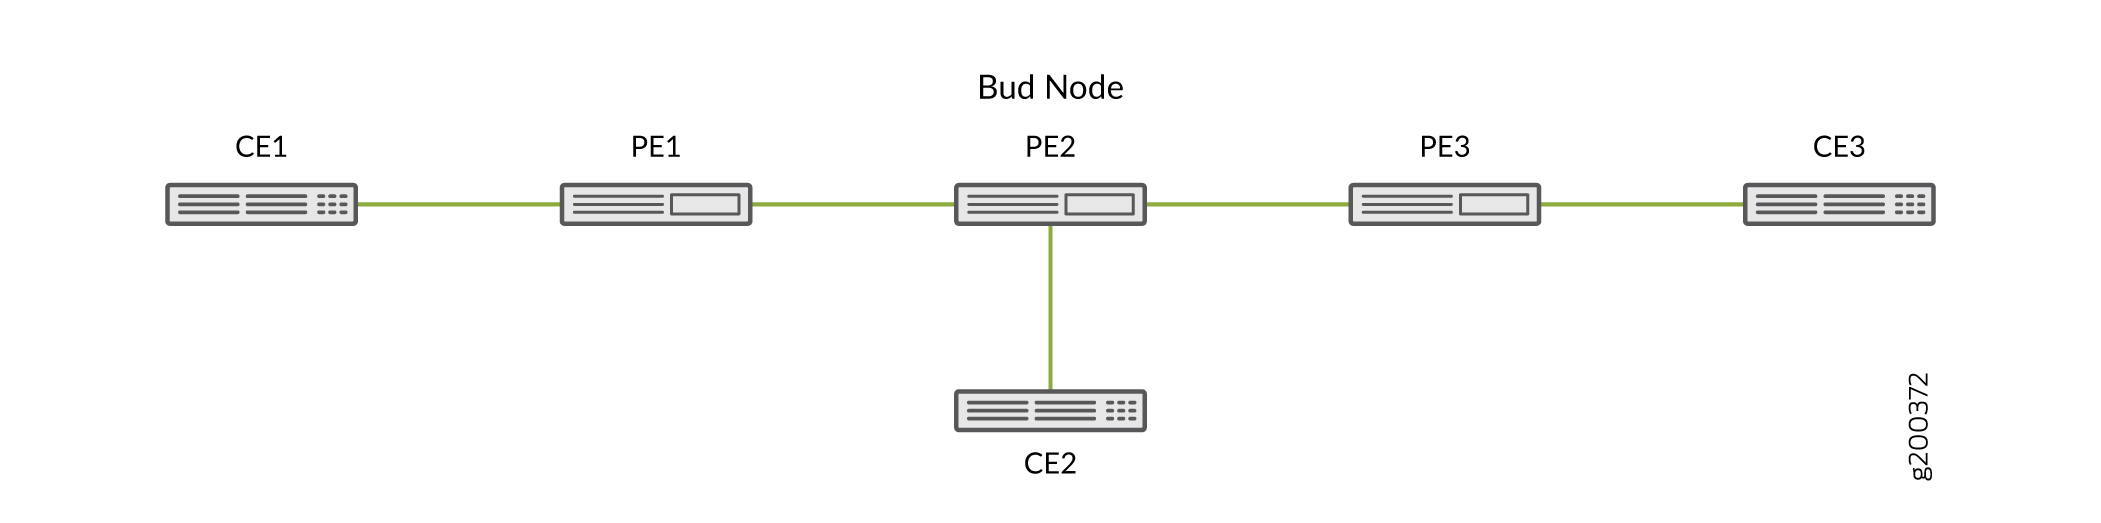 Bud Node in an EVPN Network